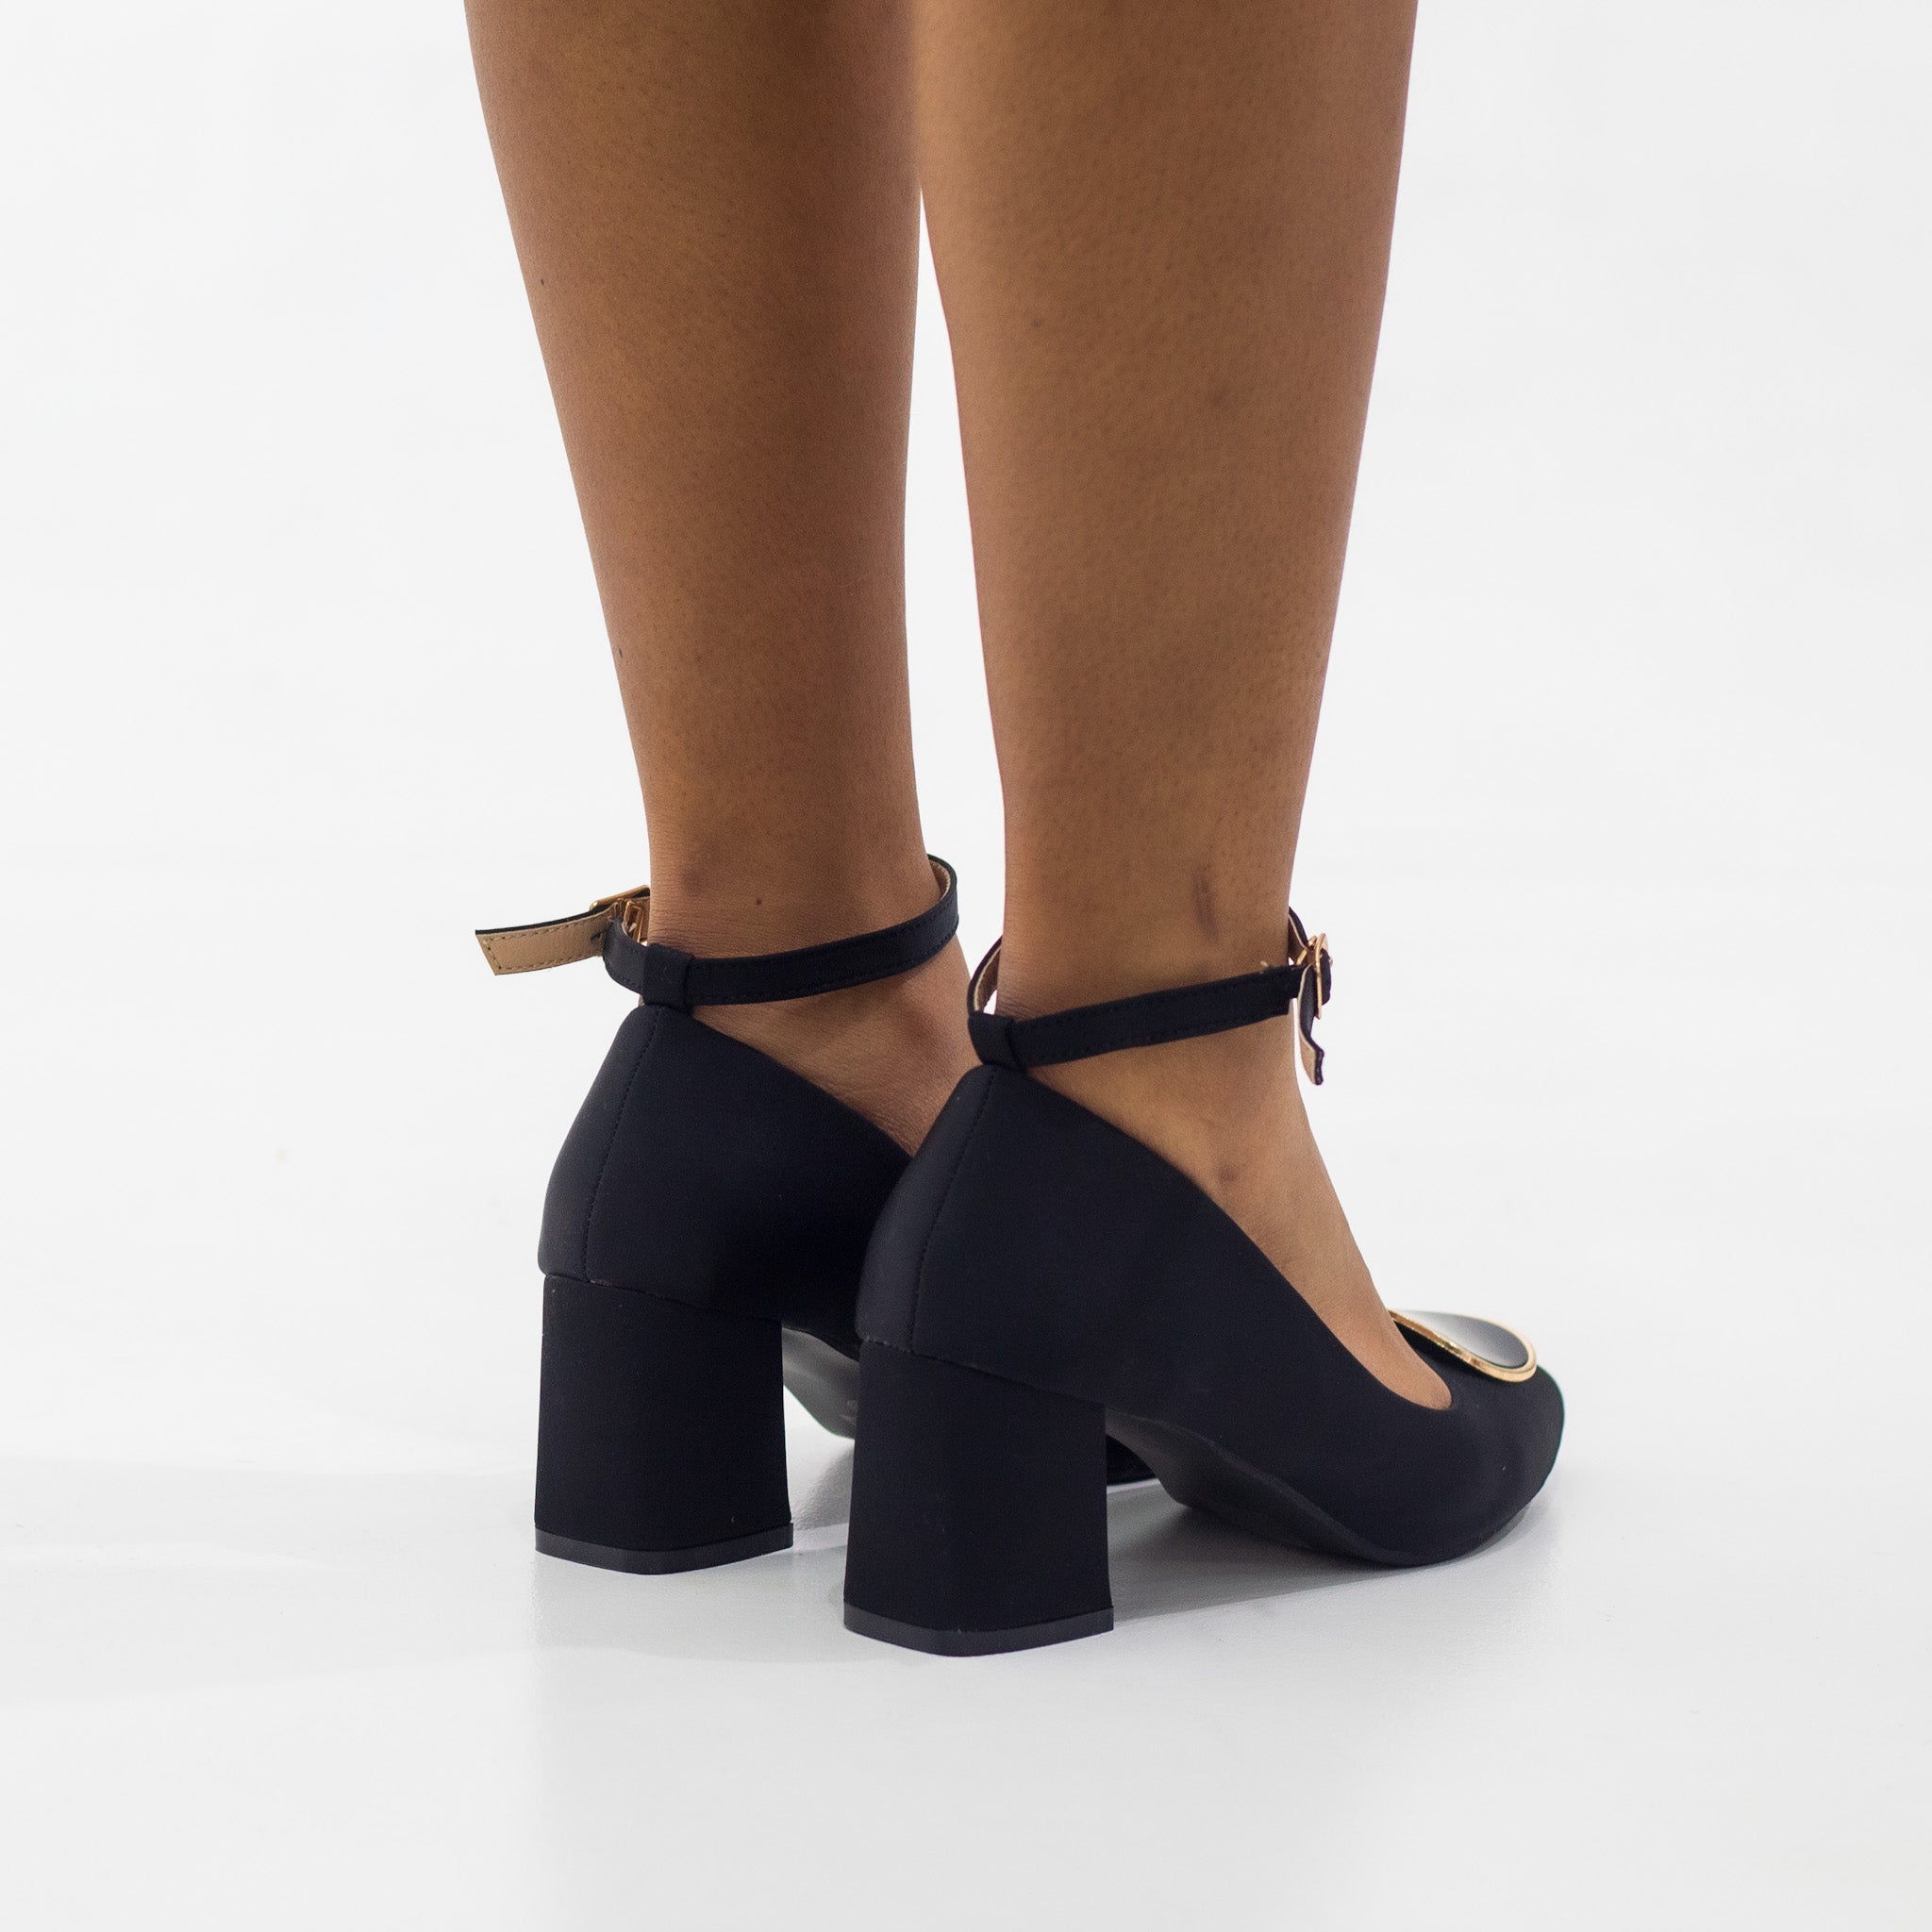 Black 7.5cm block heel ankle strap court with a round trim trip